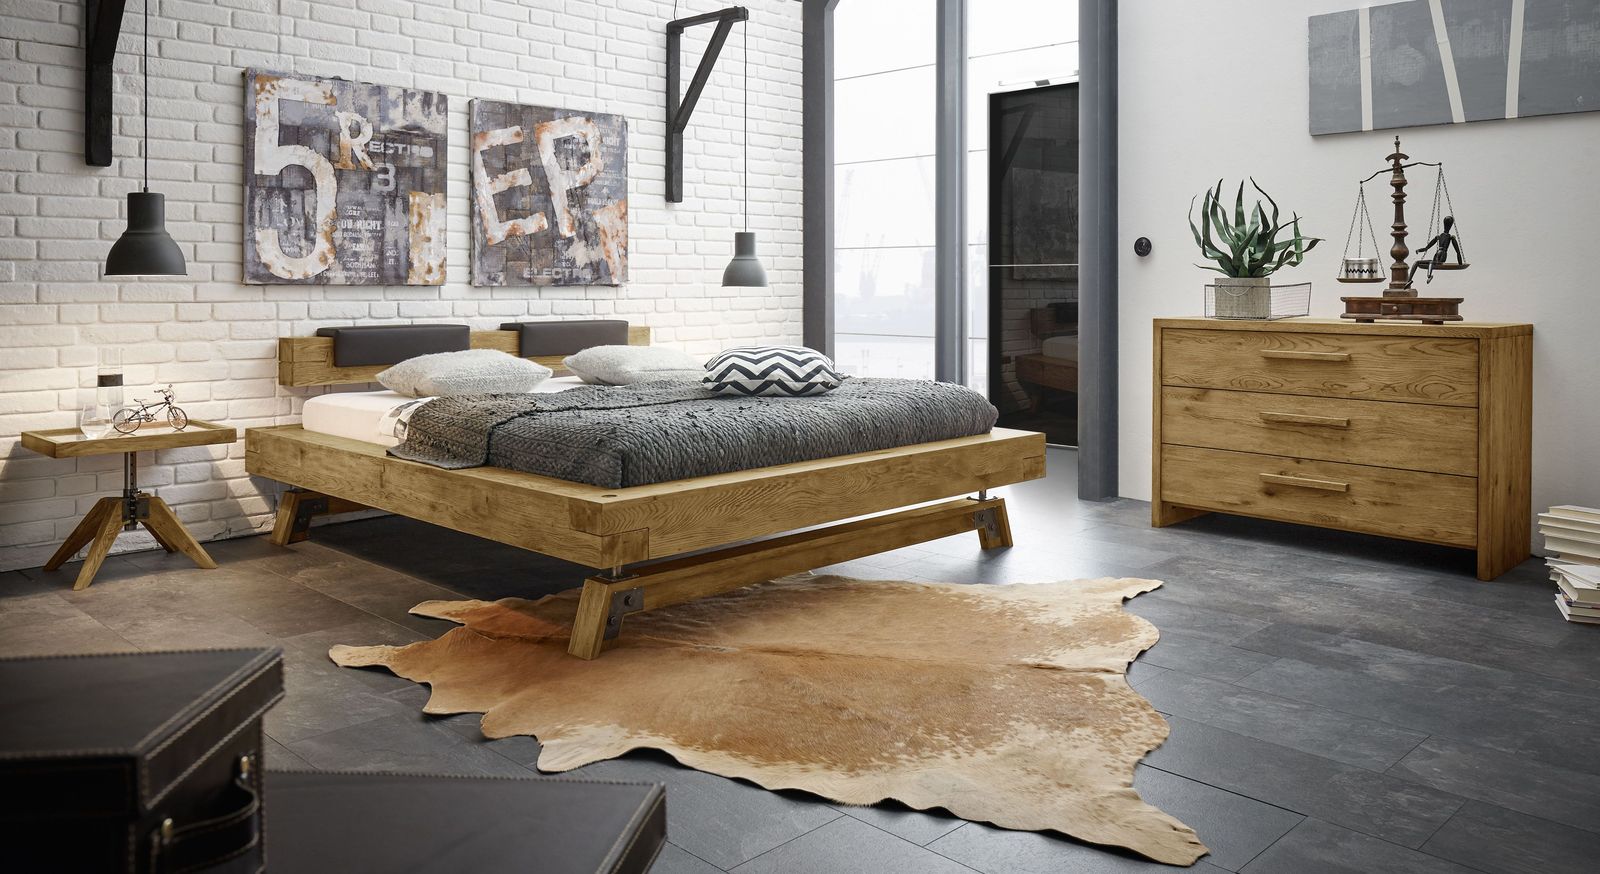 Betten & Möbel mit Fabrik-Charme ᐅ BETTEN.de Stilwelt Industrial